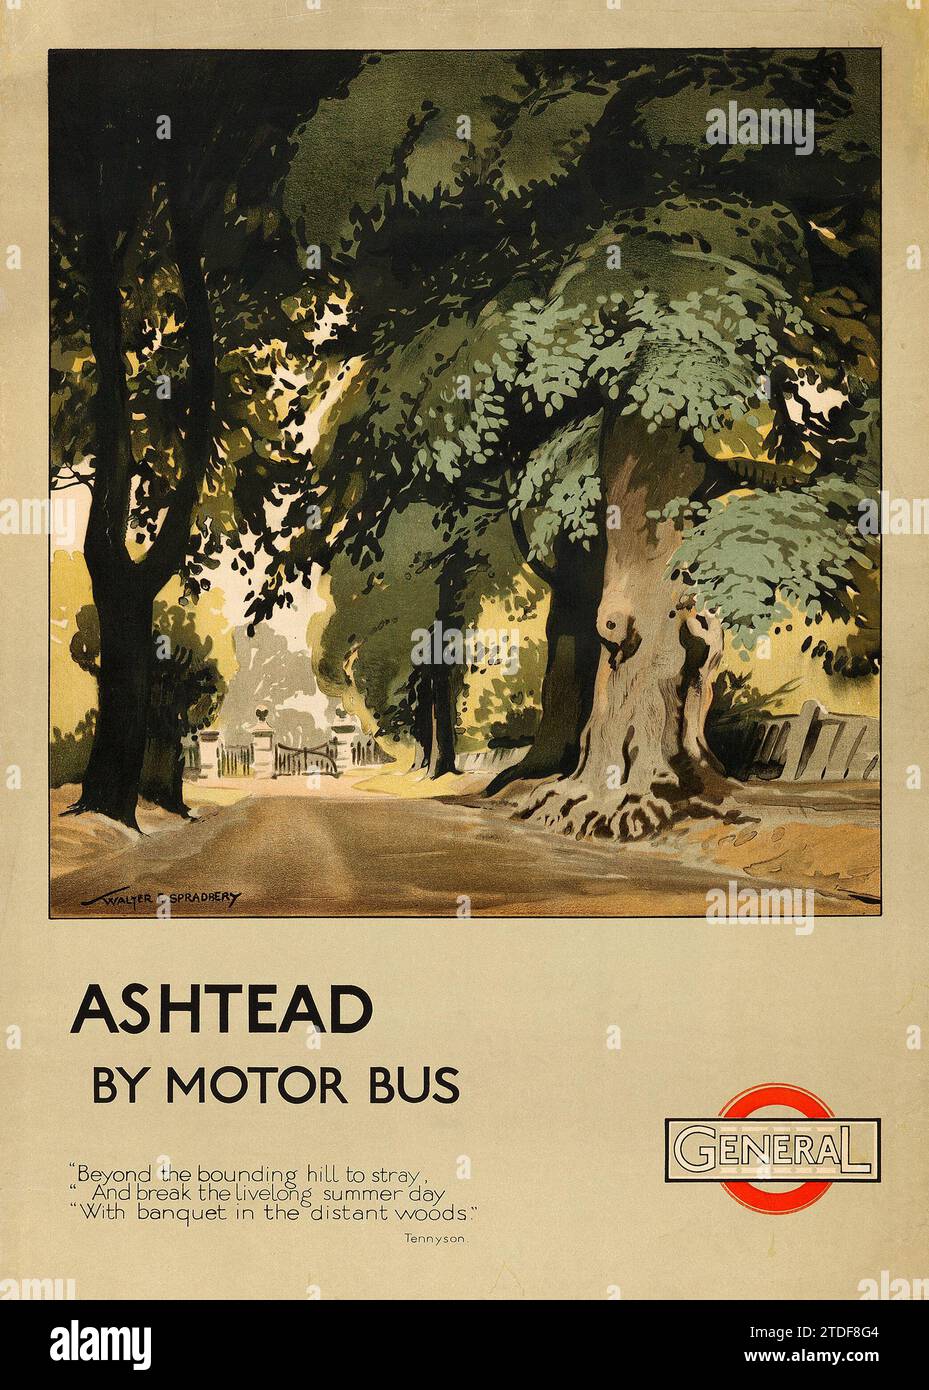 Ashtead by motor bus (General, 1921). Travel Poster - Walter E. Spradbery Artwork Stock Photo